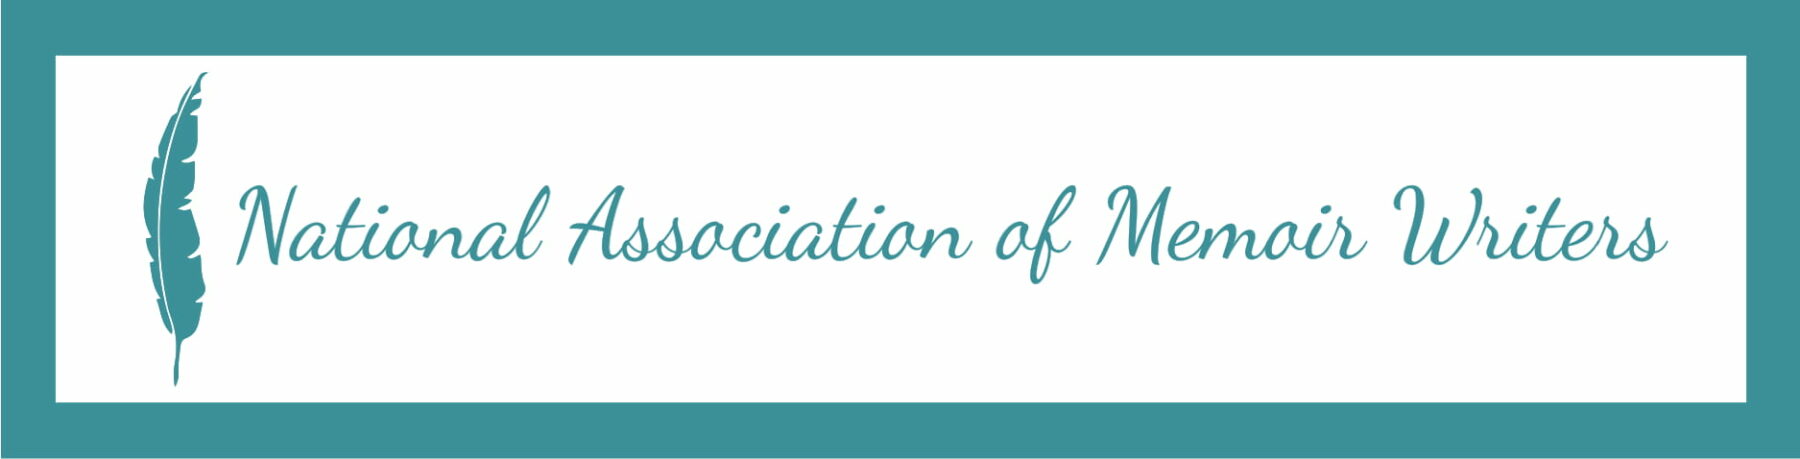 National Association of Memoir Writers - Professional Associations - JobStars USA